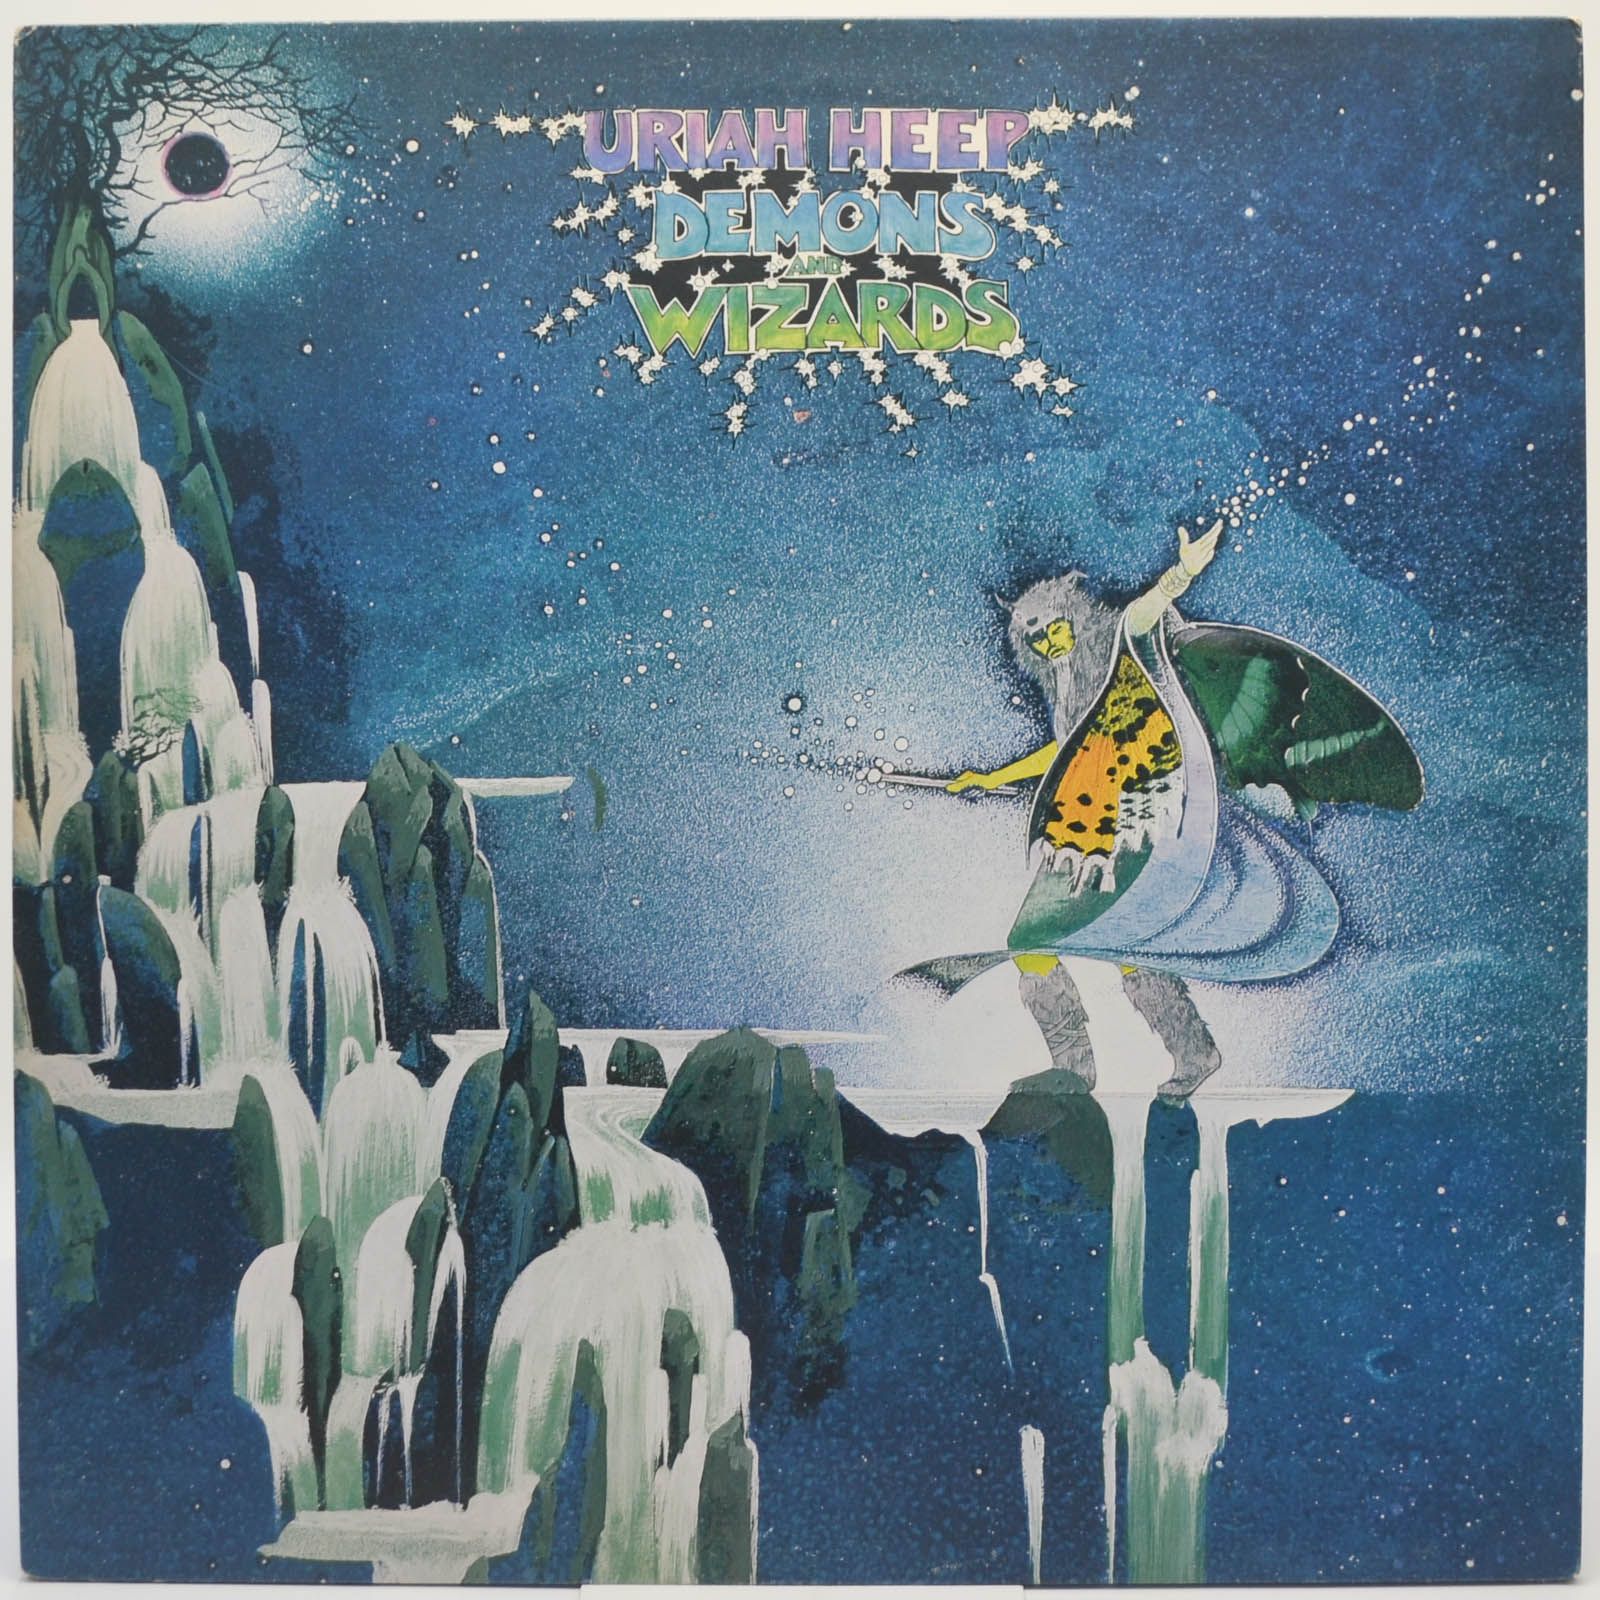 Uriah Heep — Demons And Wizards (UK), 1972